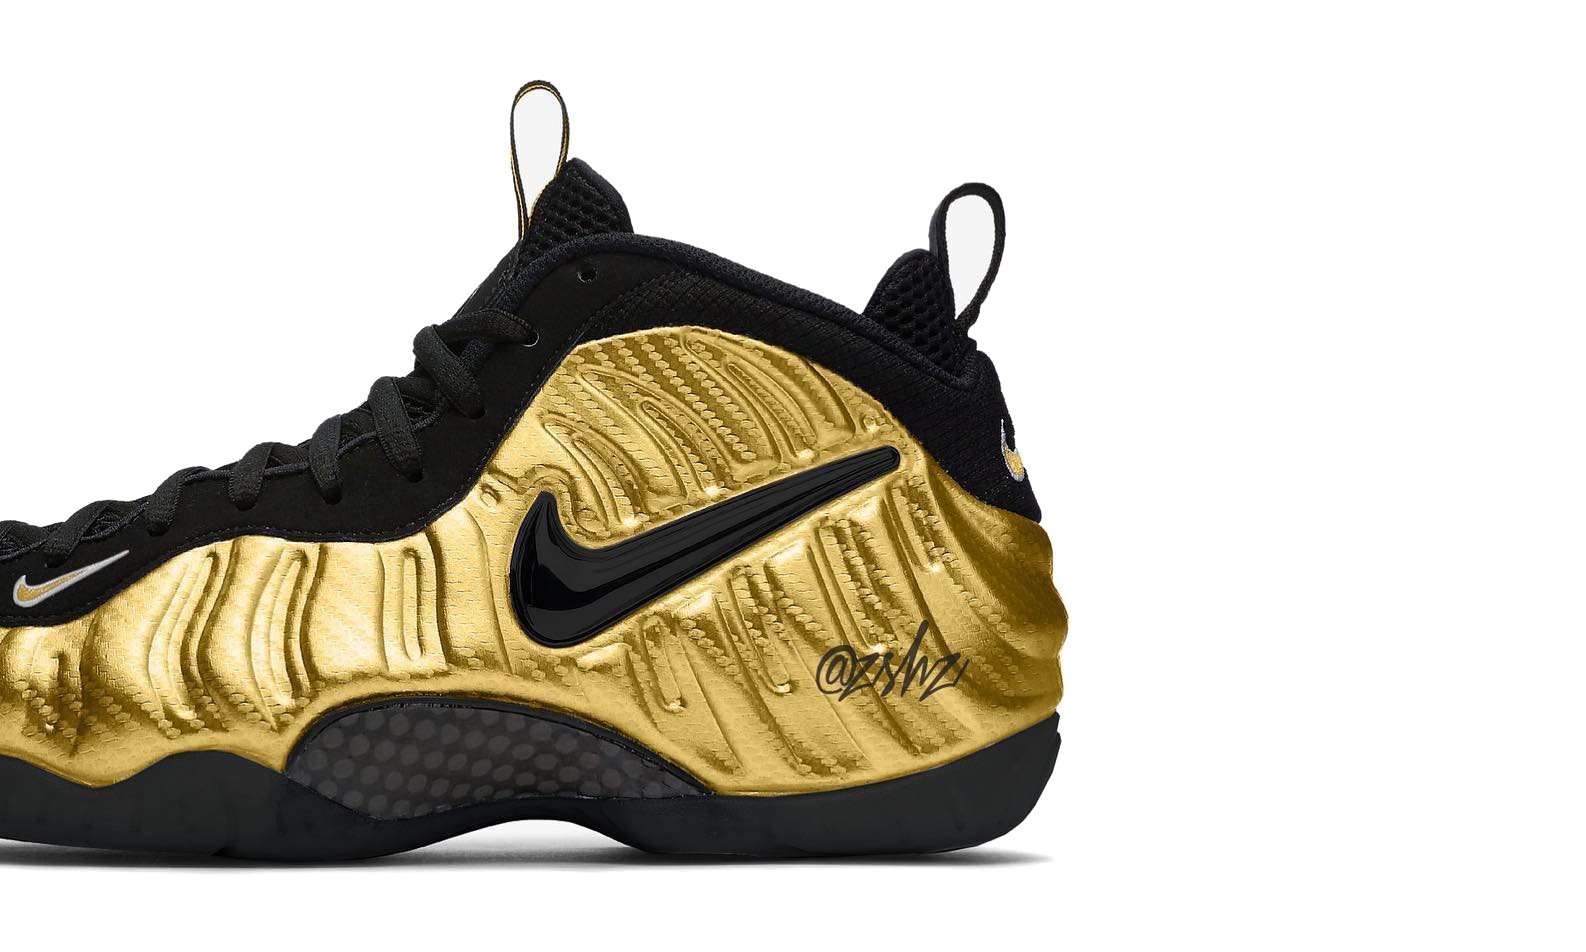 Nike 即将于 10 月带回 Air Foamposite Pro “Metallic Gold” 配色